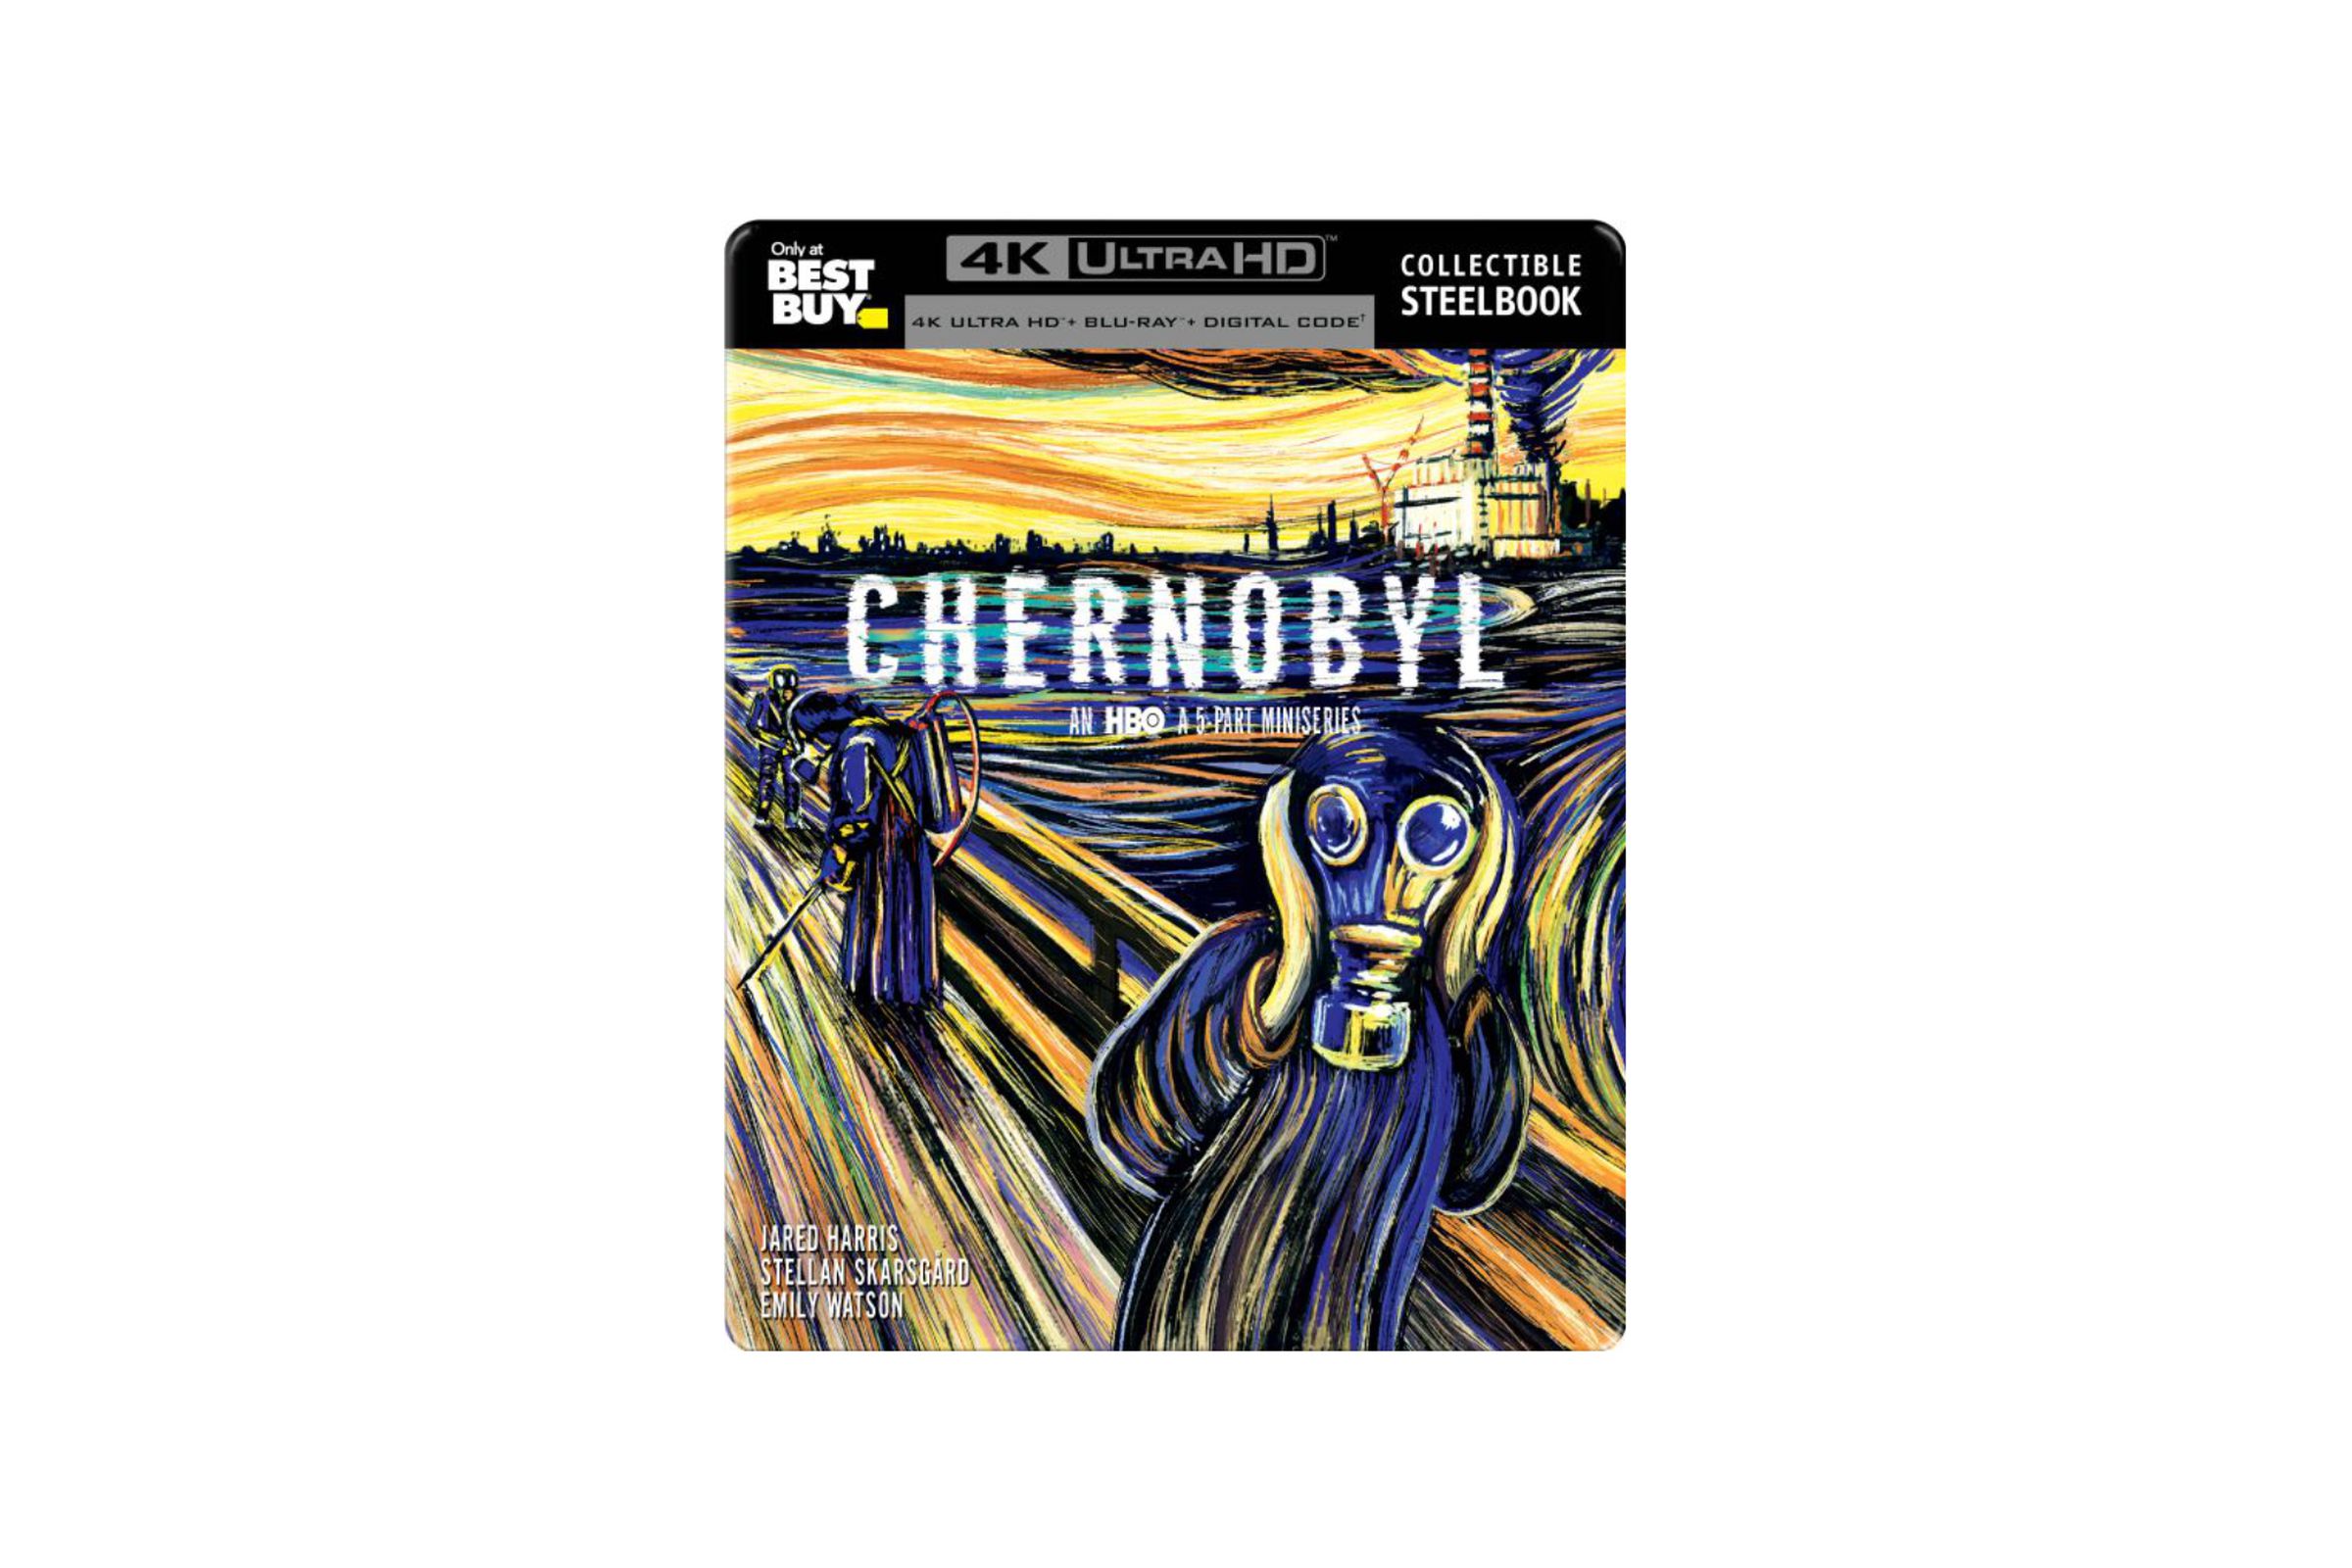 chernobyl uhd blu-ray